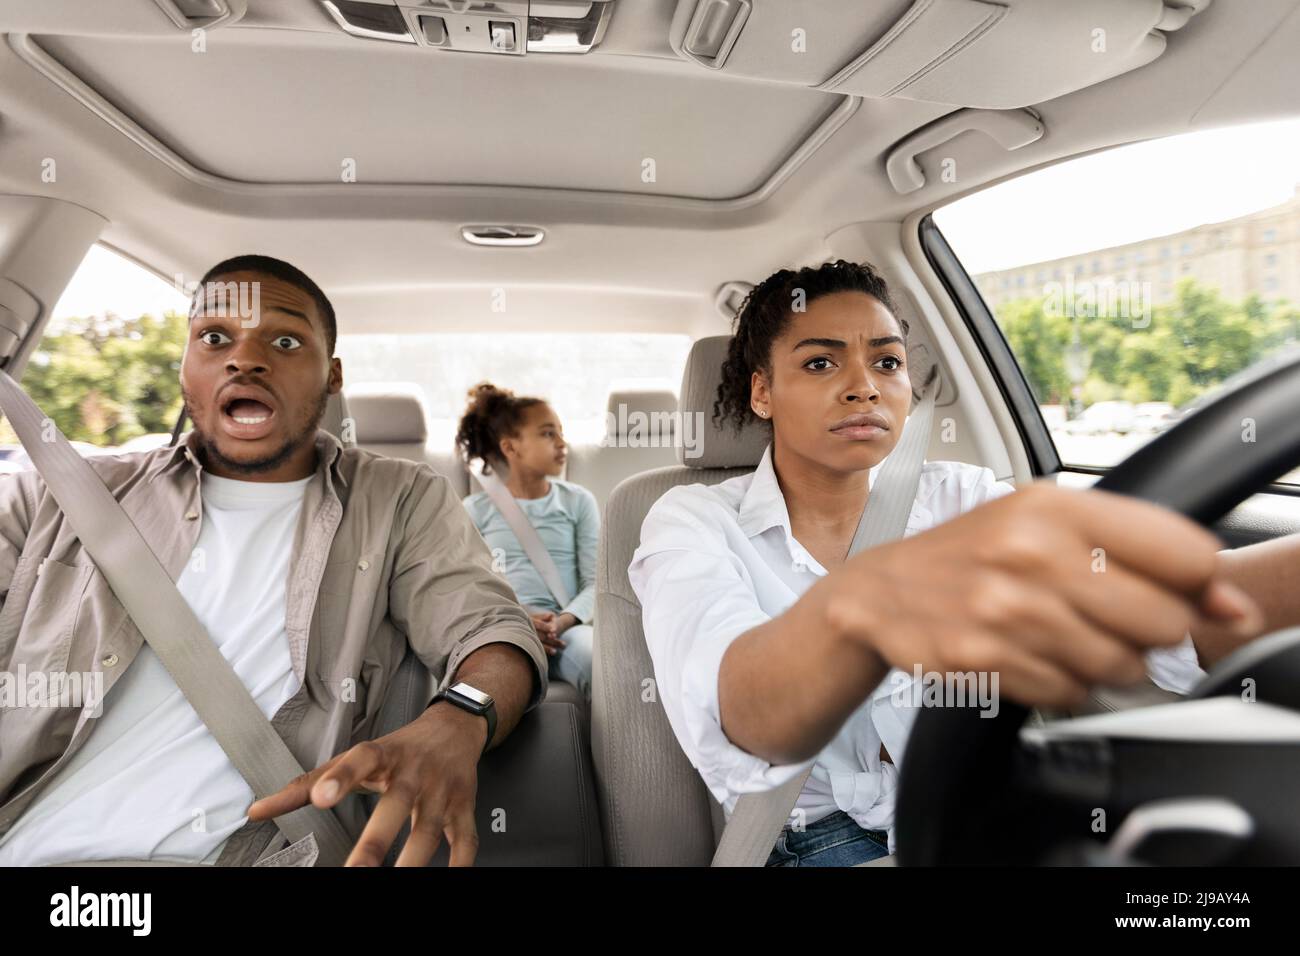 Black Family Riding Auto Having Danger Of Car Accident Stock Photo